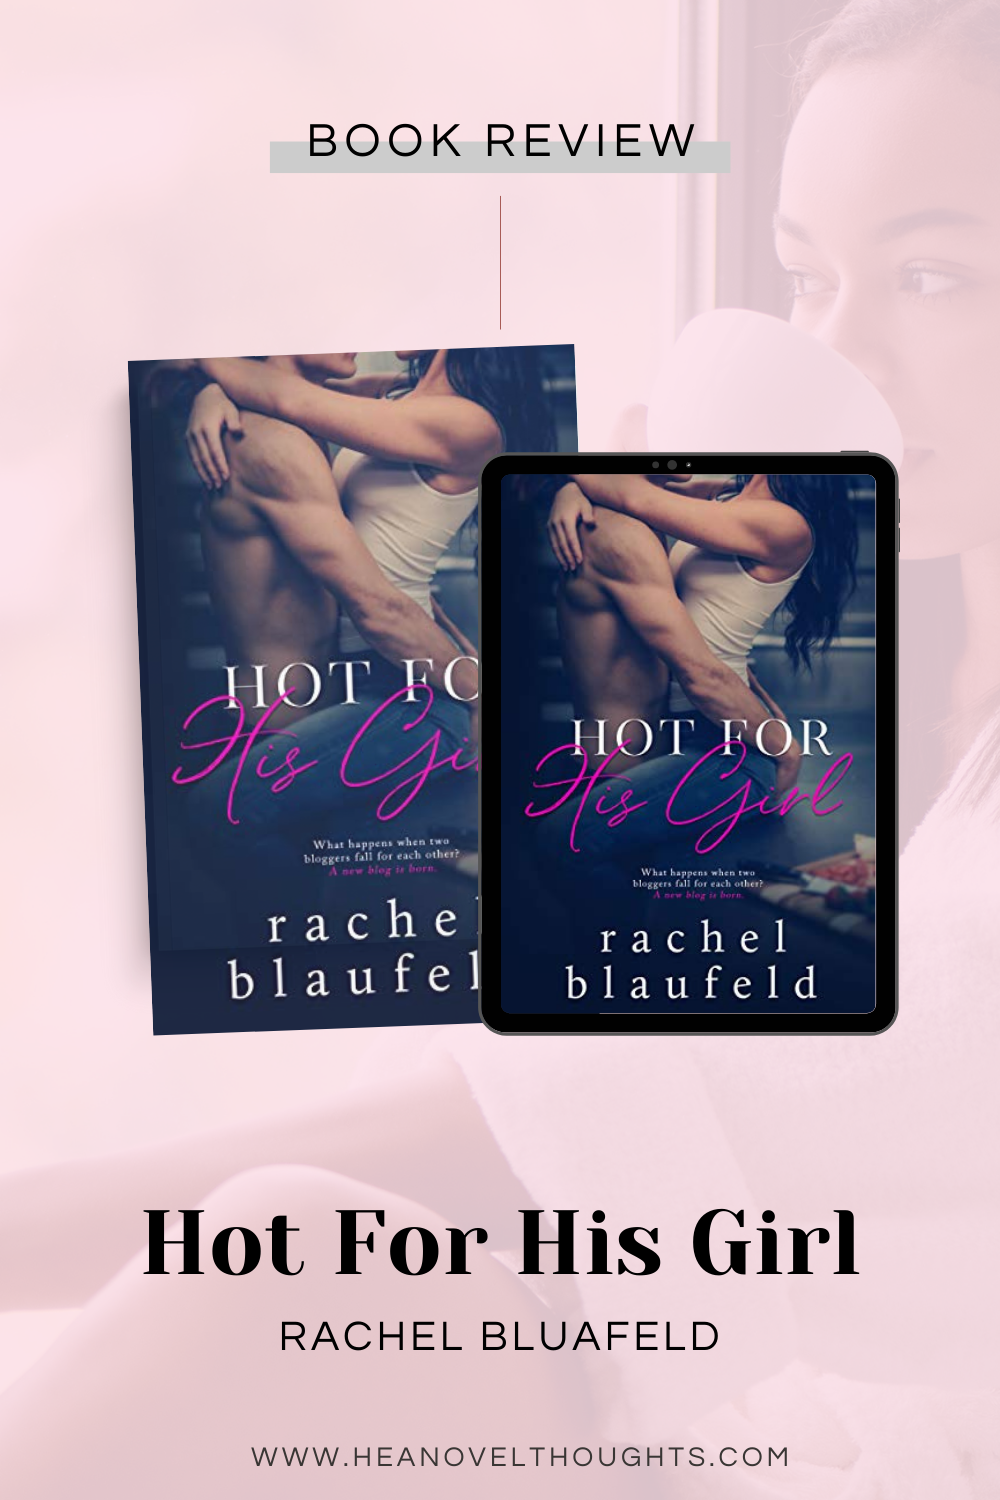 Hot For His Girl by Rachel Blaufeld